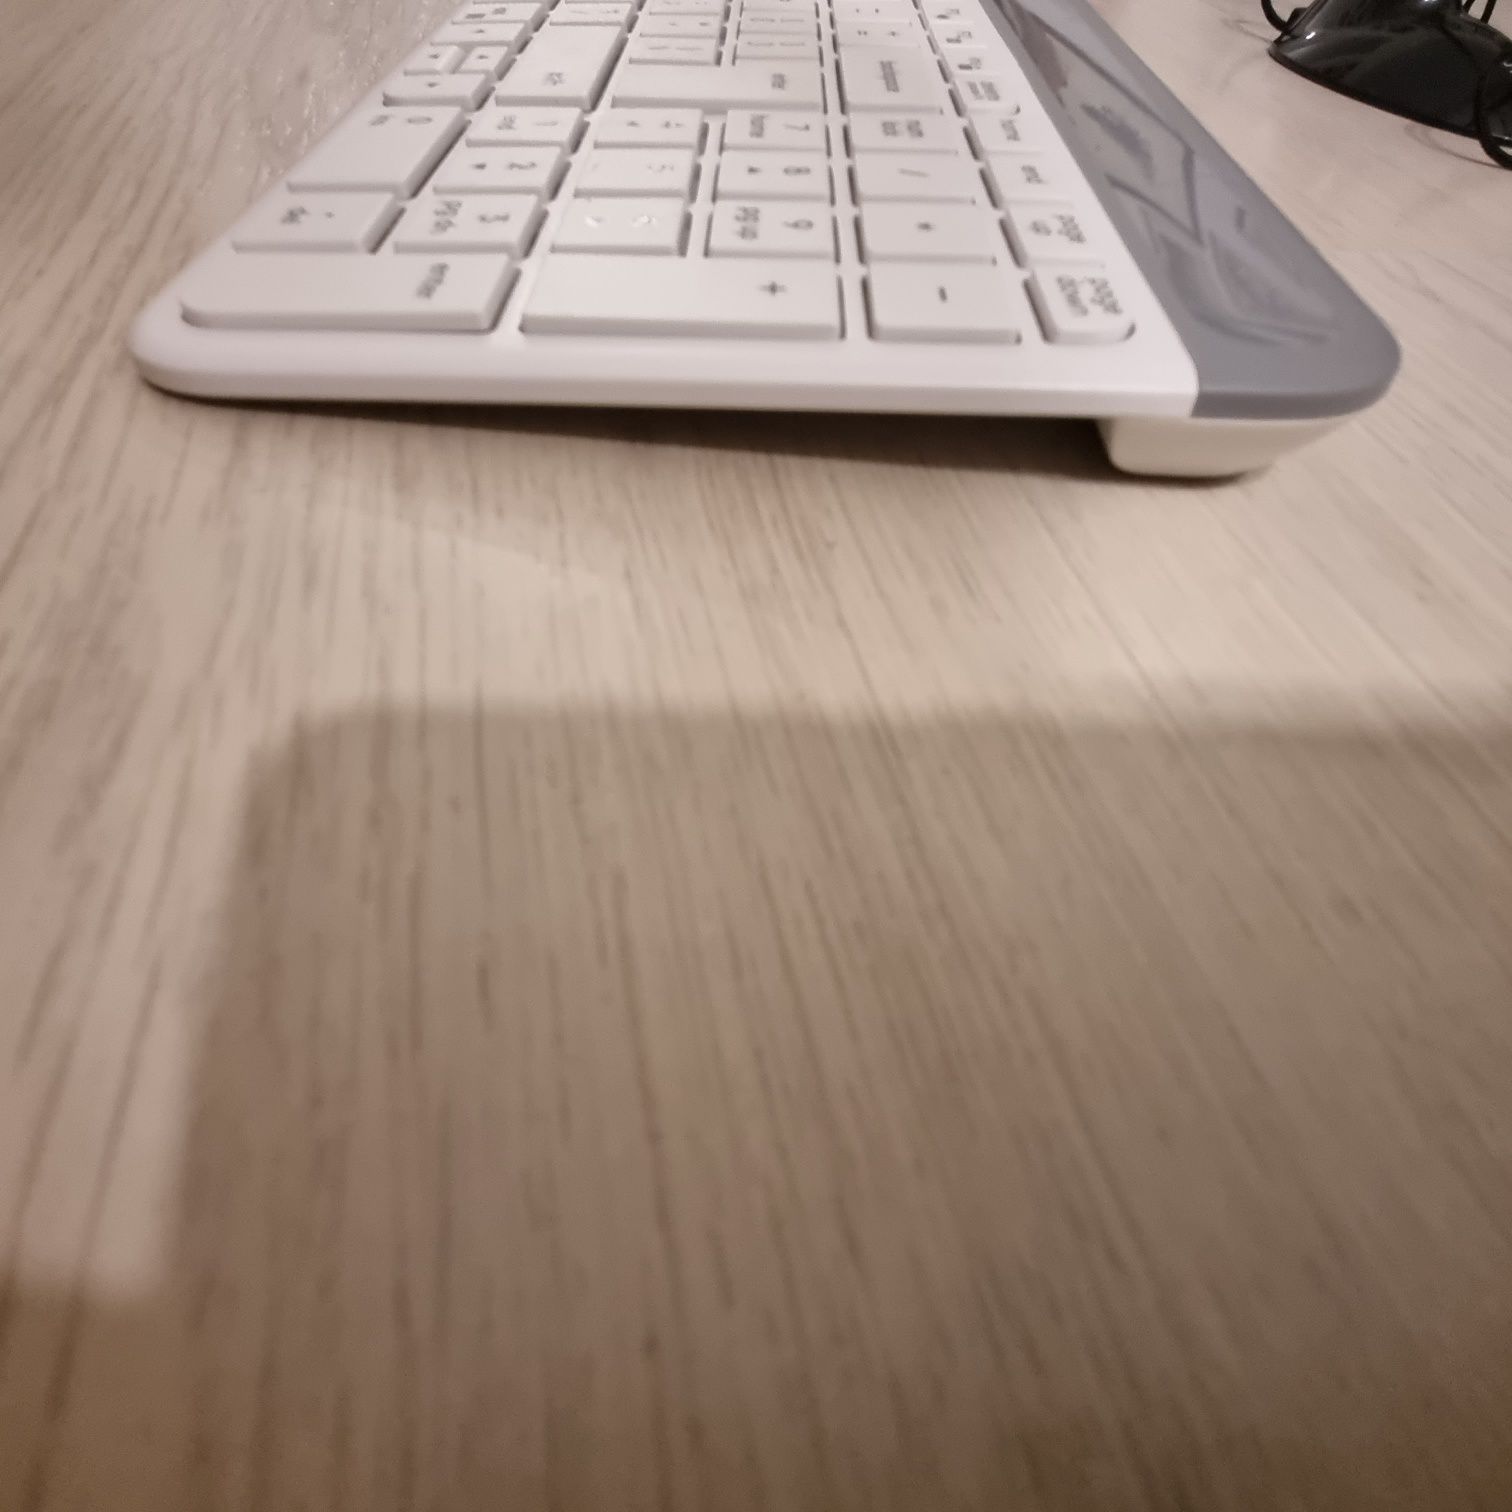 Tastatura, mouse și microfon